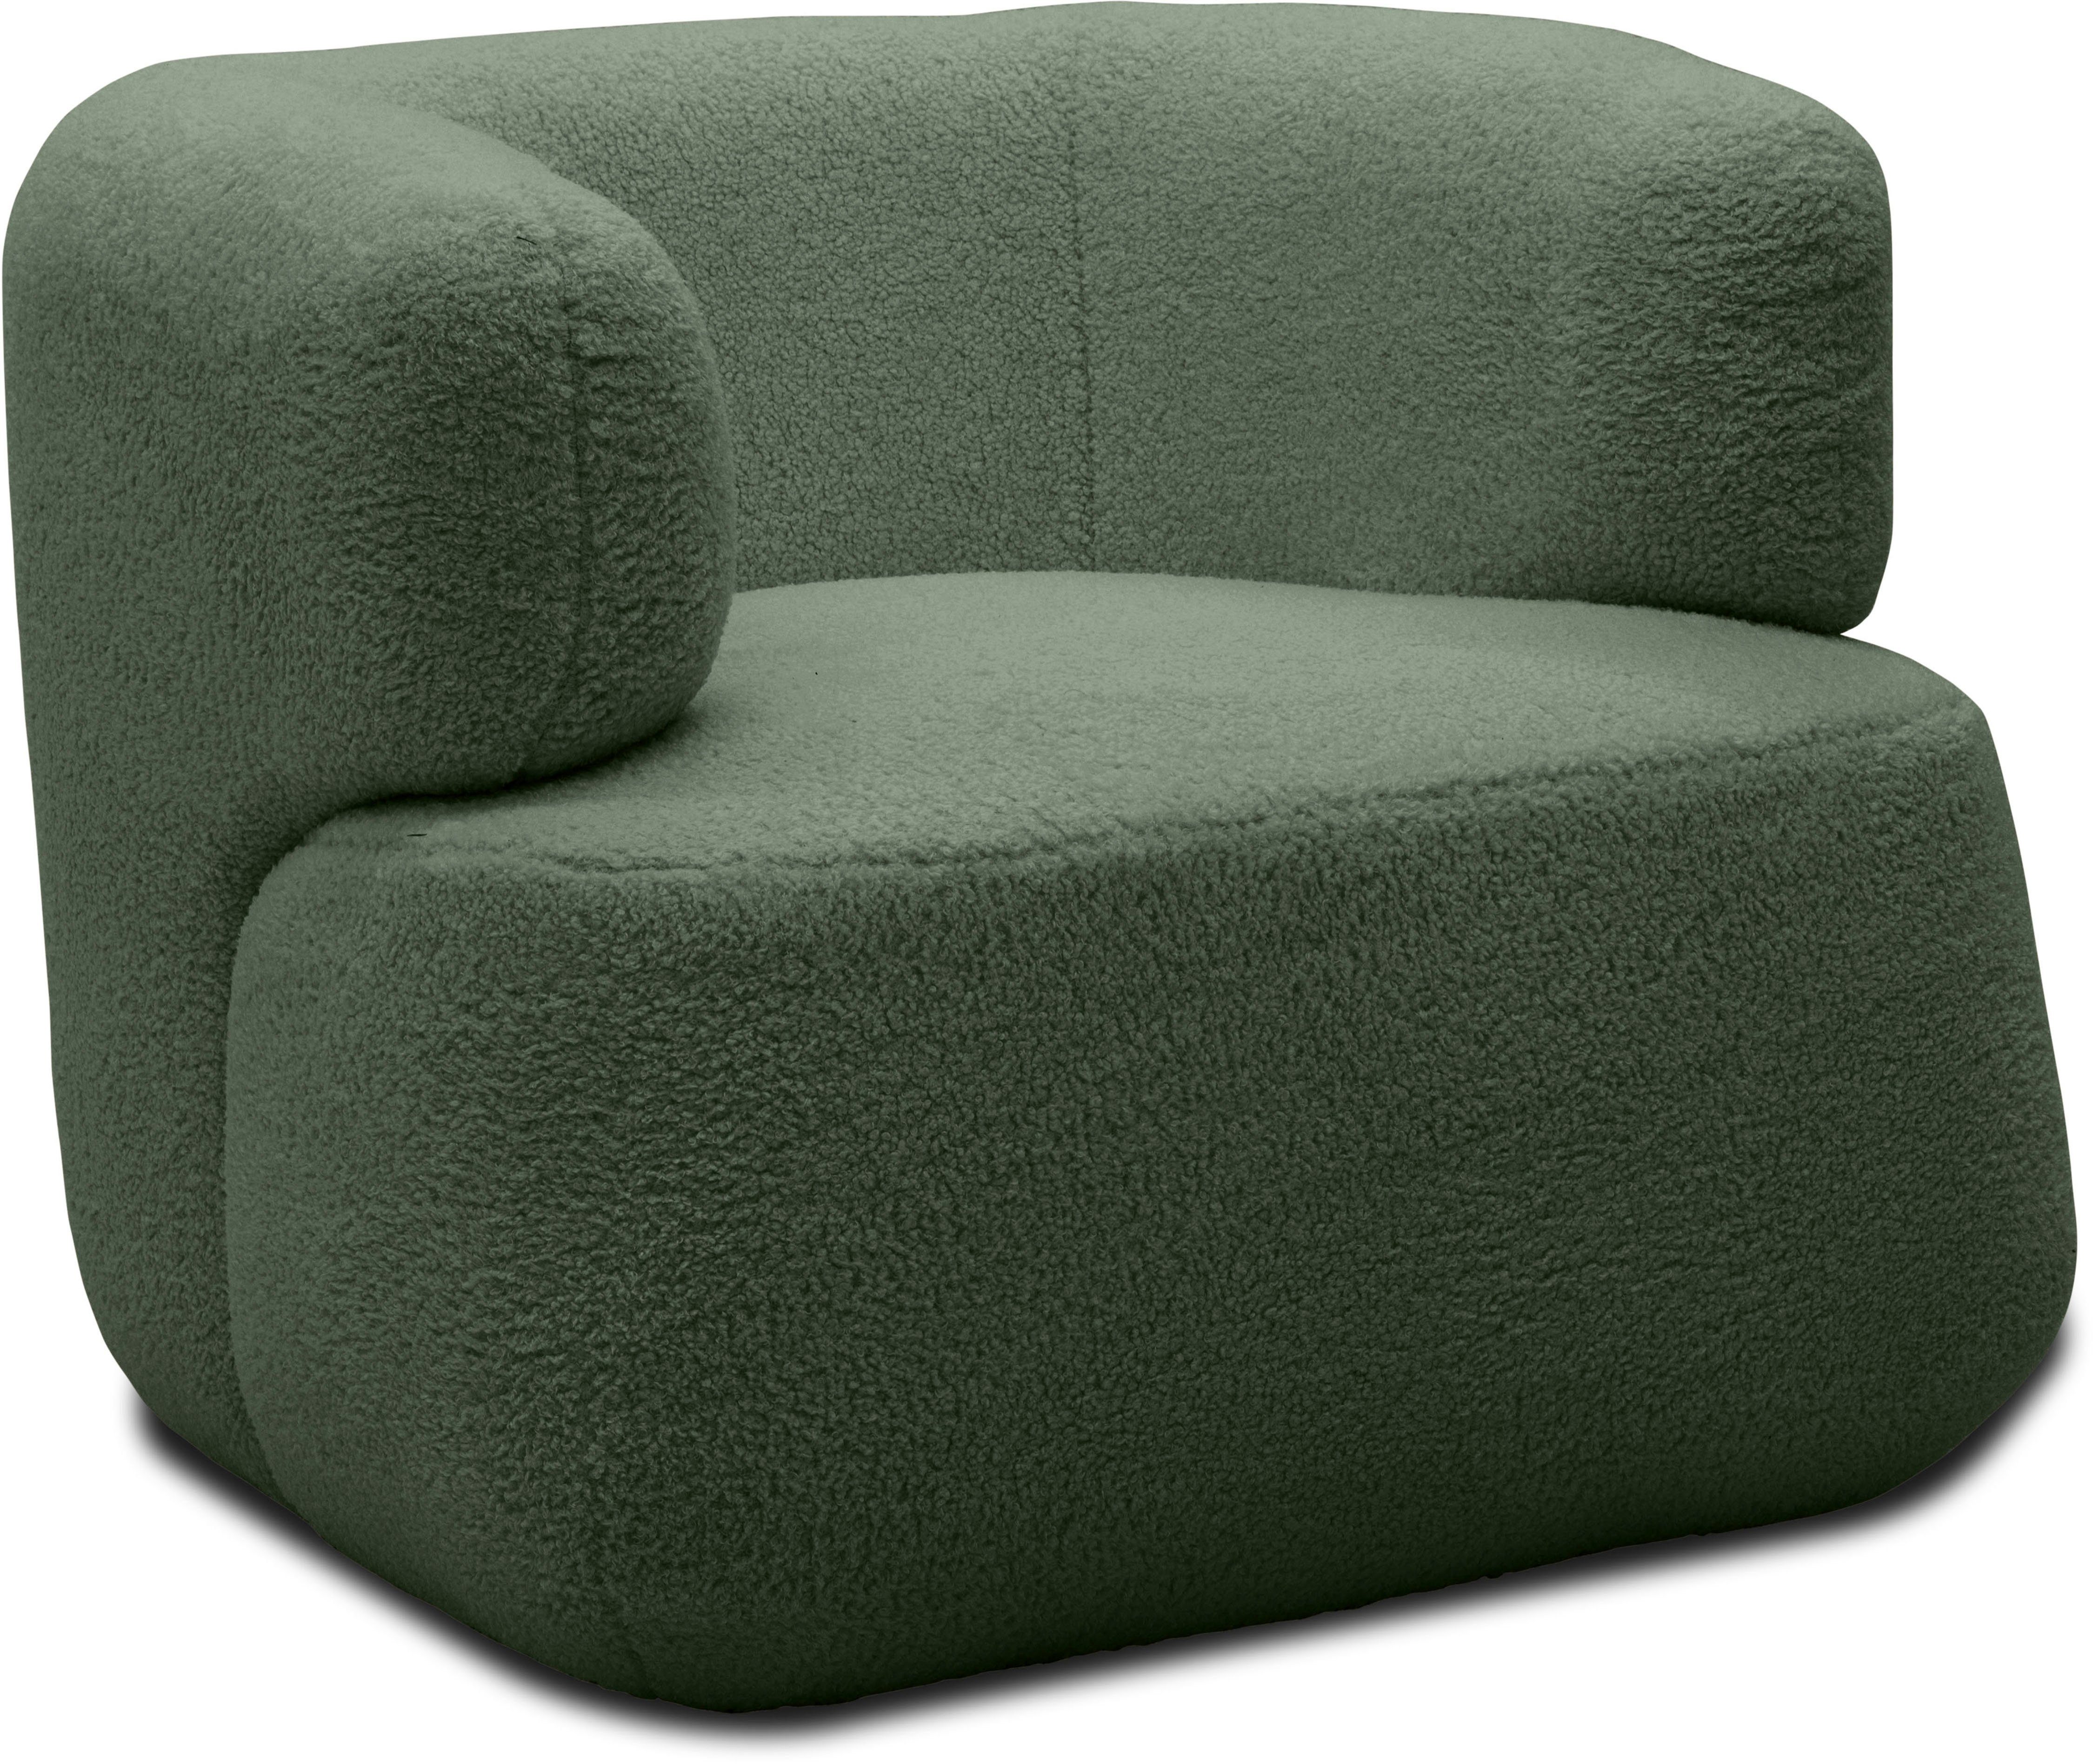 DOMO collection Sessel 800012, Formschöner Polstersessel